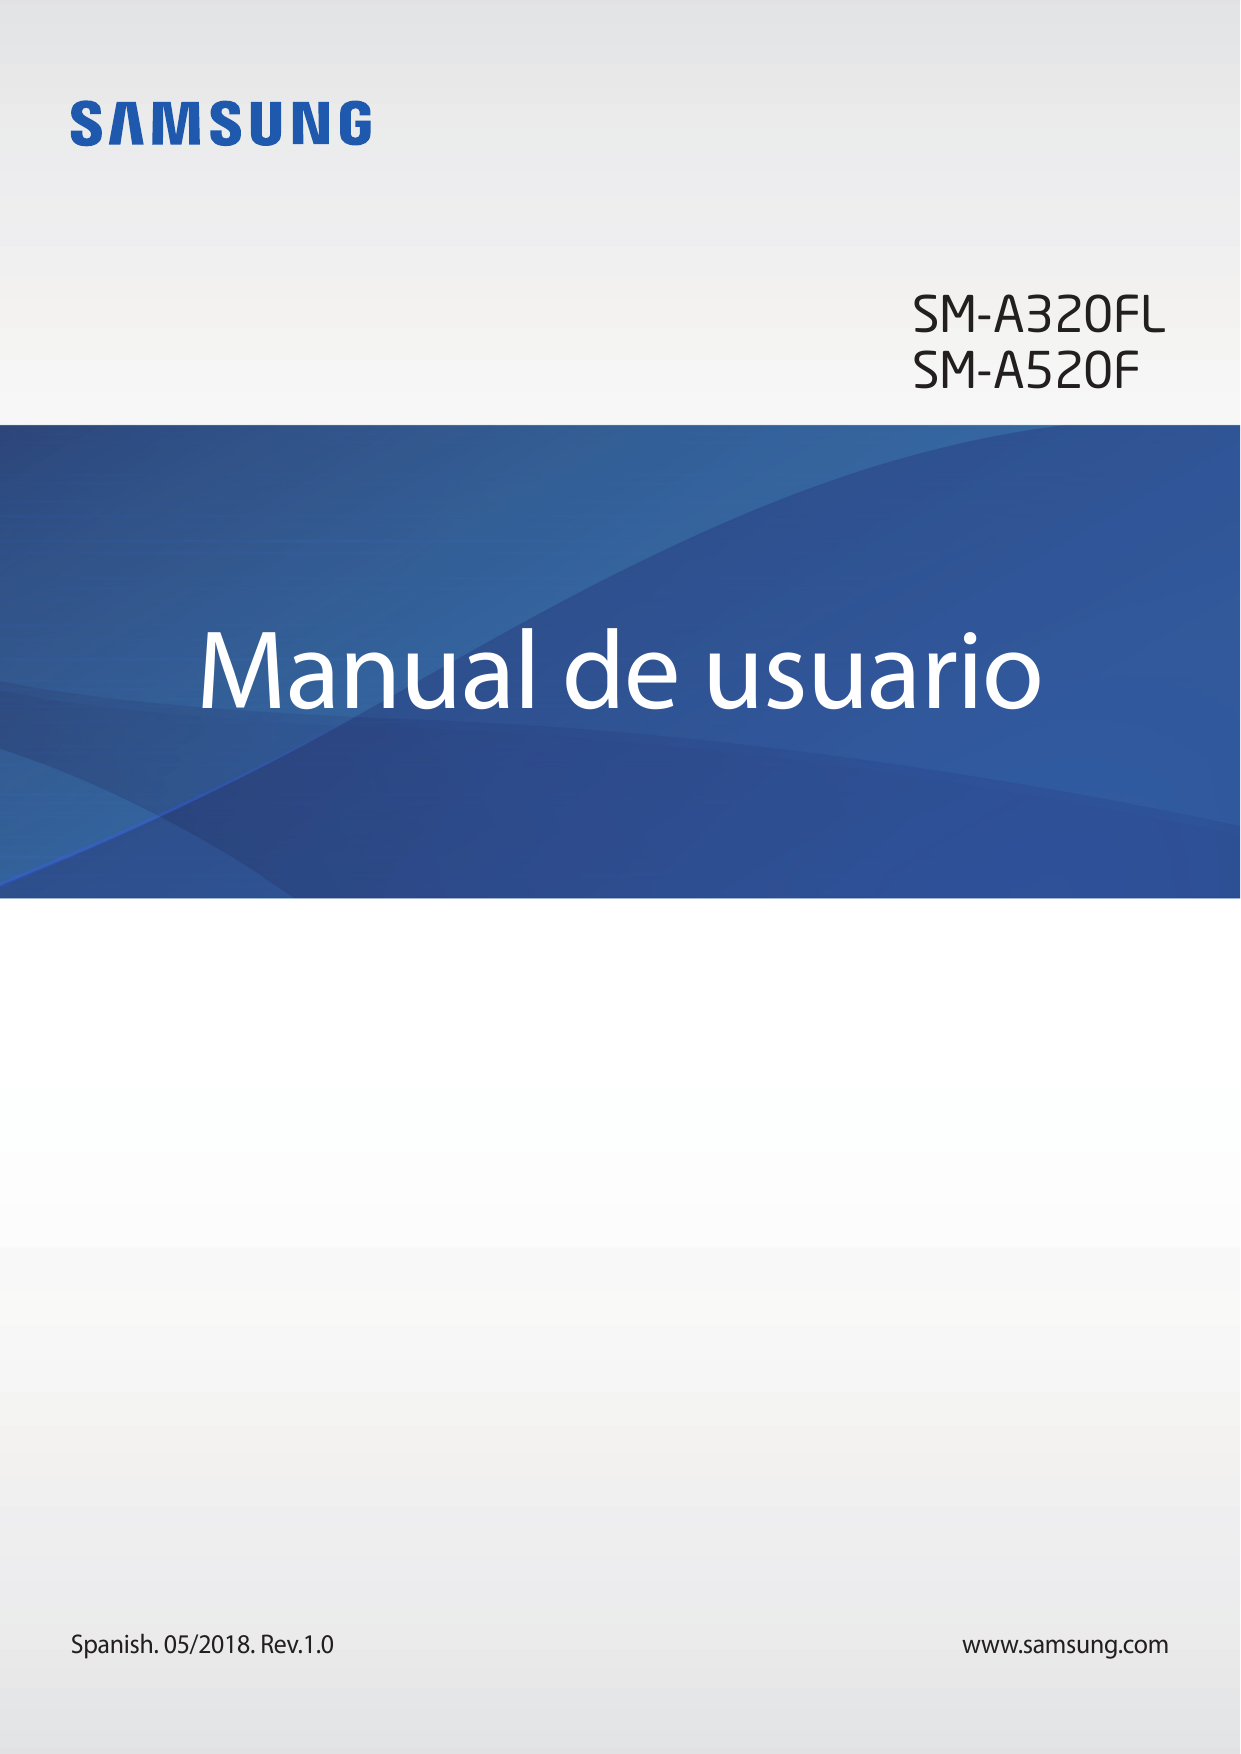 SM-A320FLSM-A520FManual de usuarioSpanish. 05/2018. Rev.1.0www.samsung.com